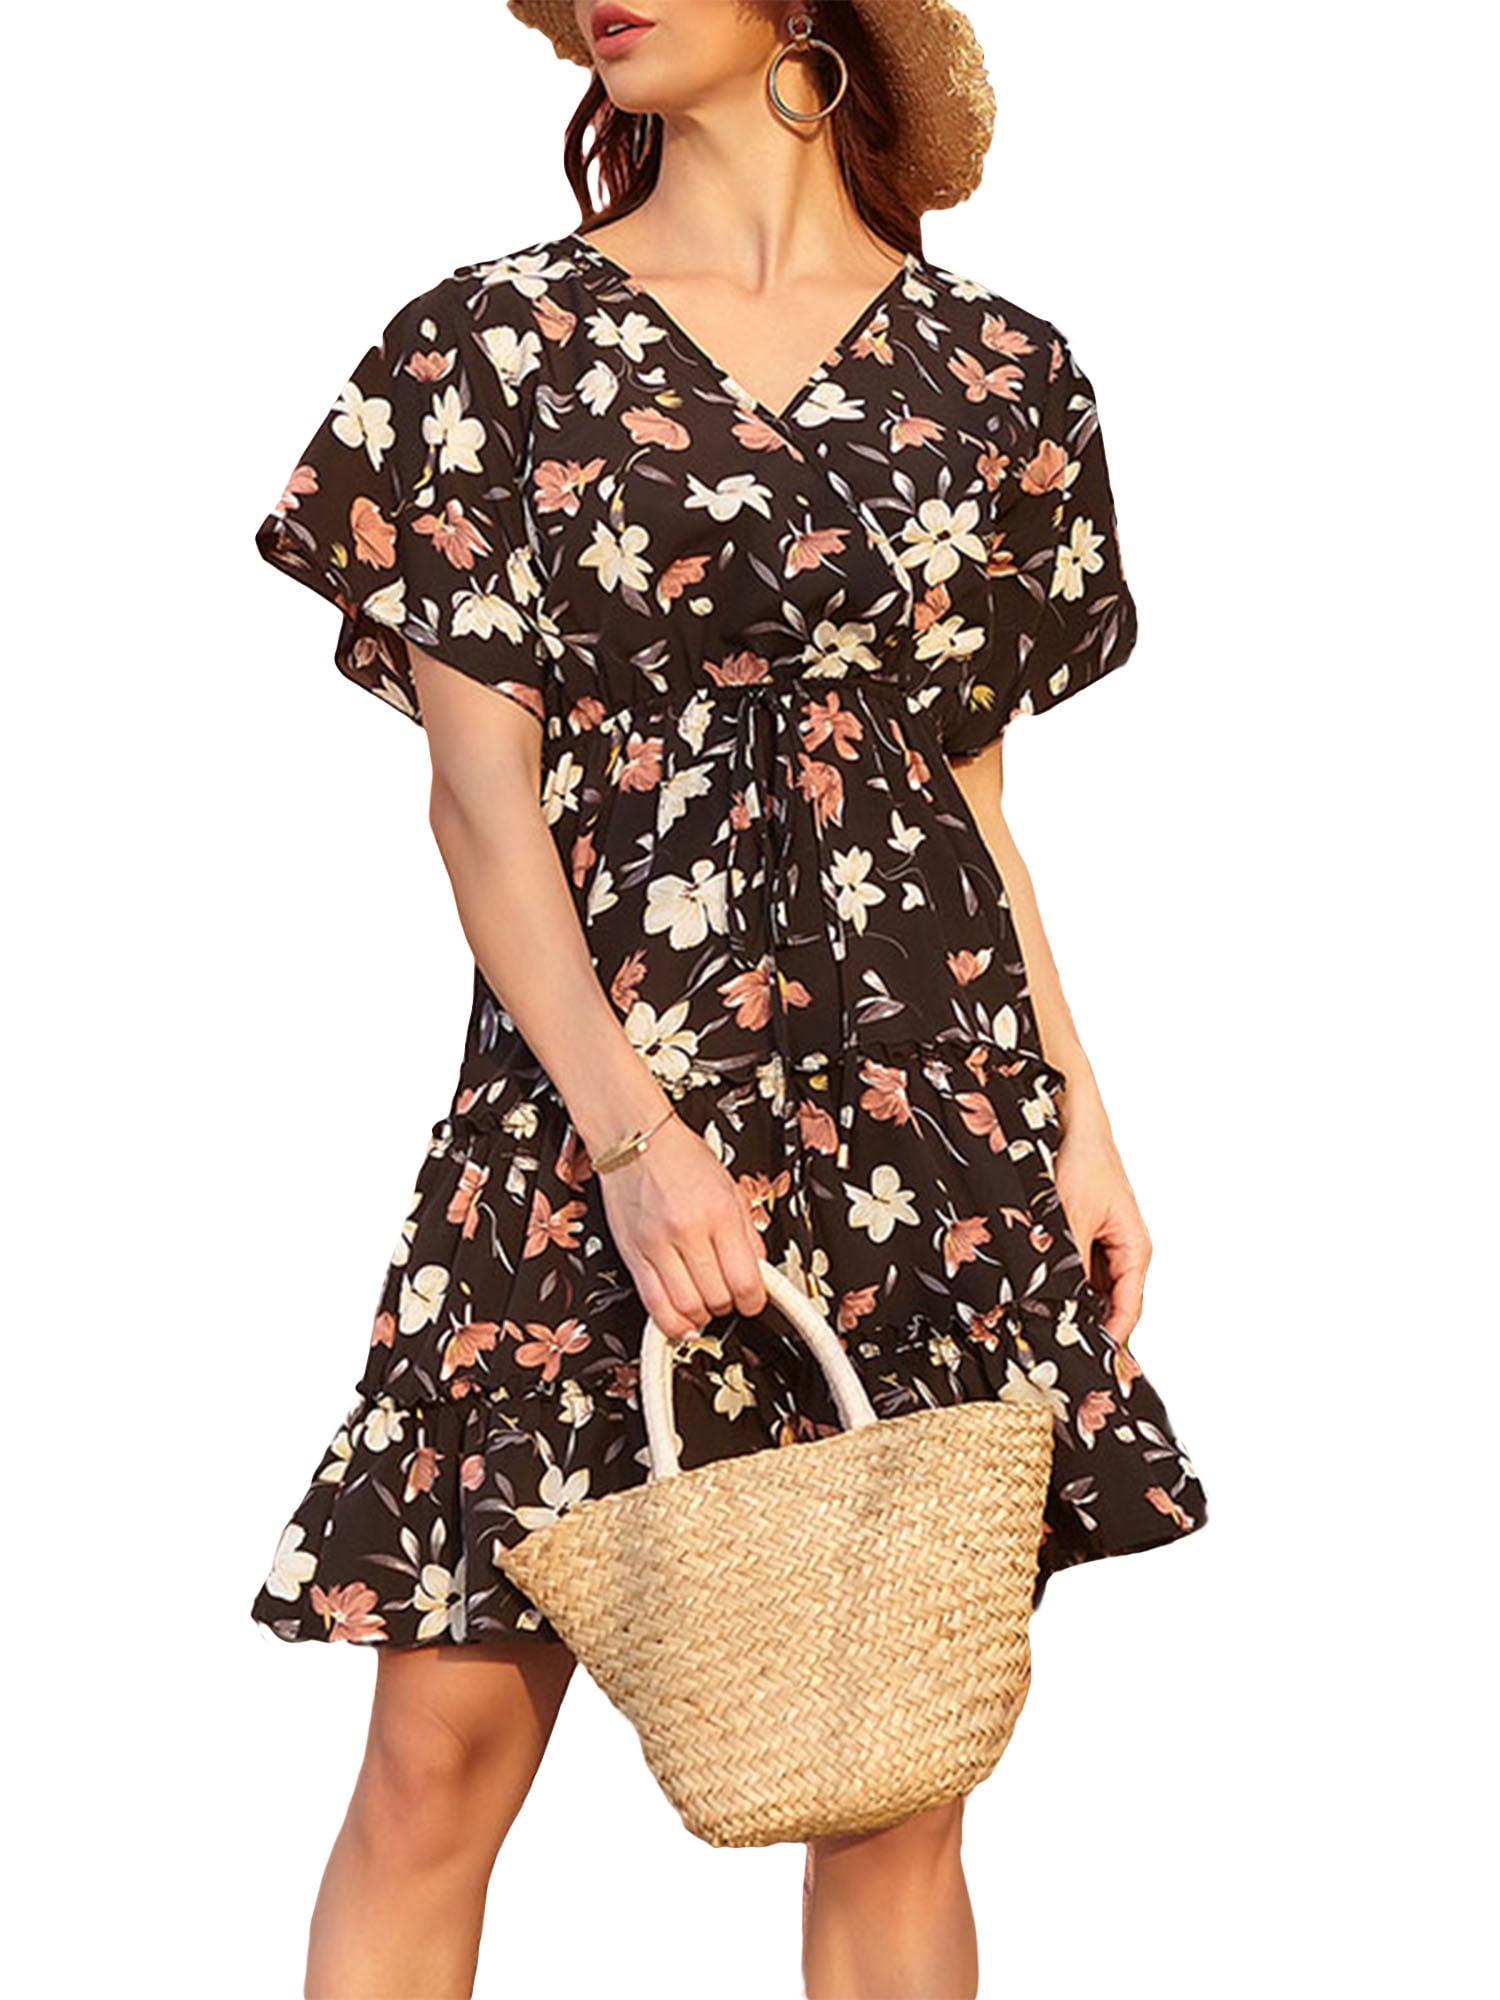 Womens Short Sleeve Floral Printed Beach Party Club Dress Summer Loose Sundress